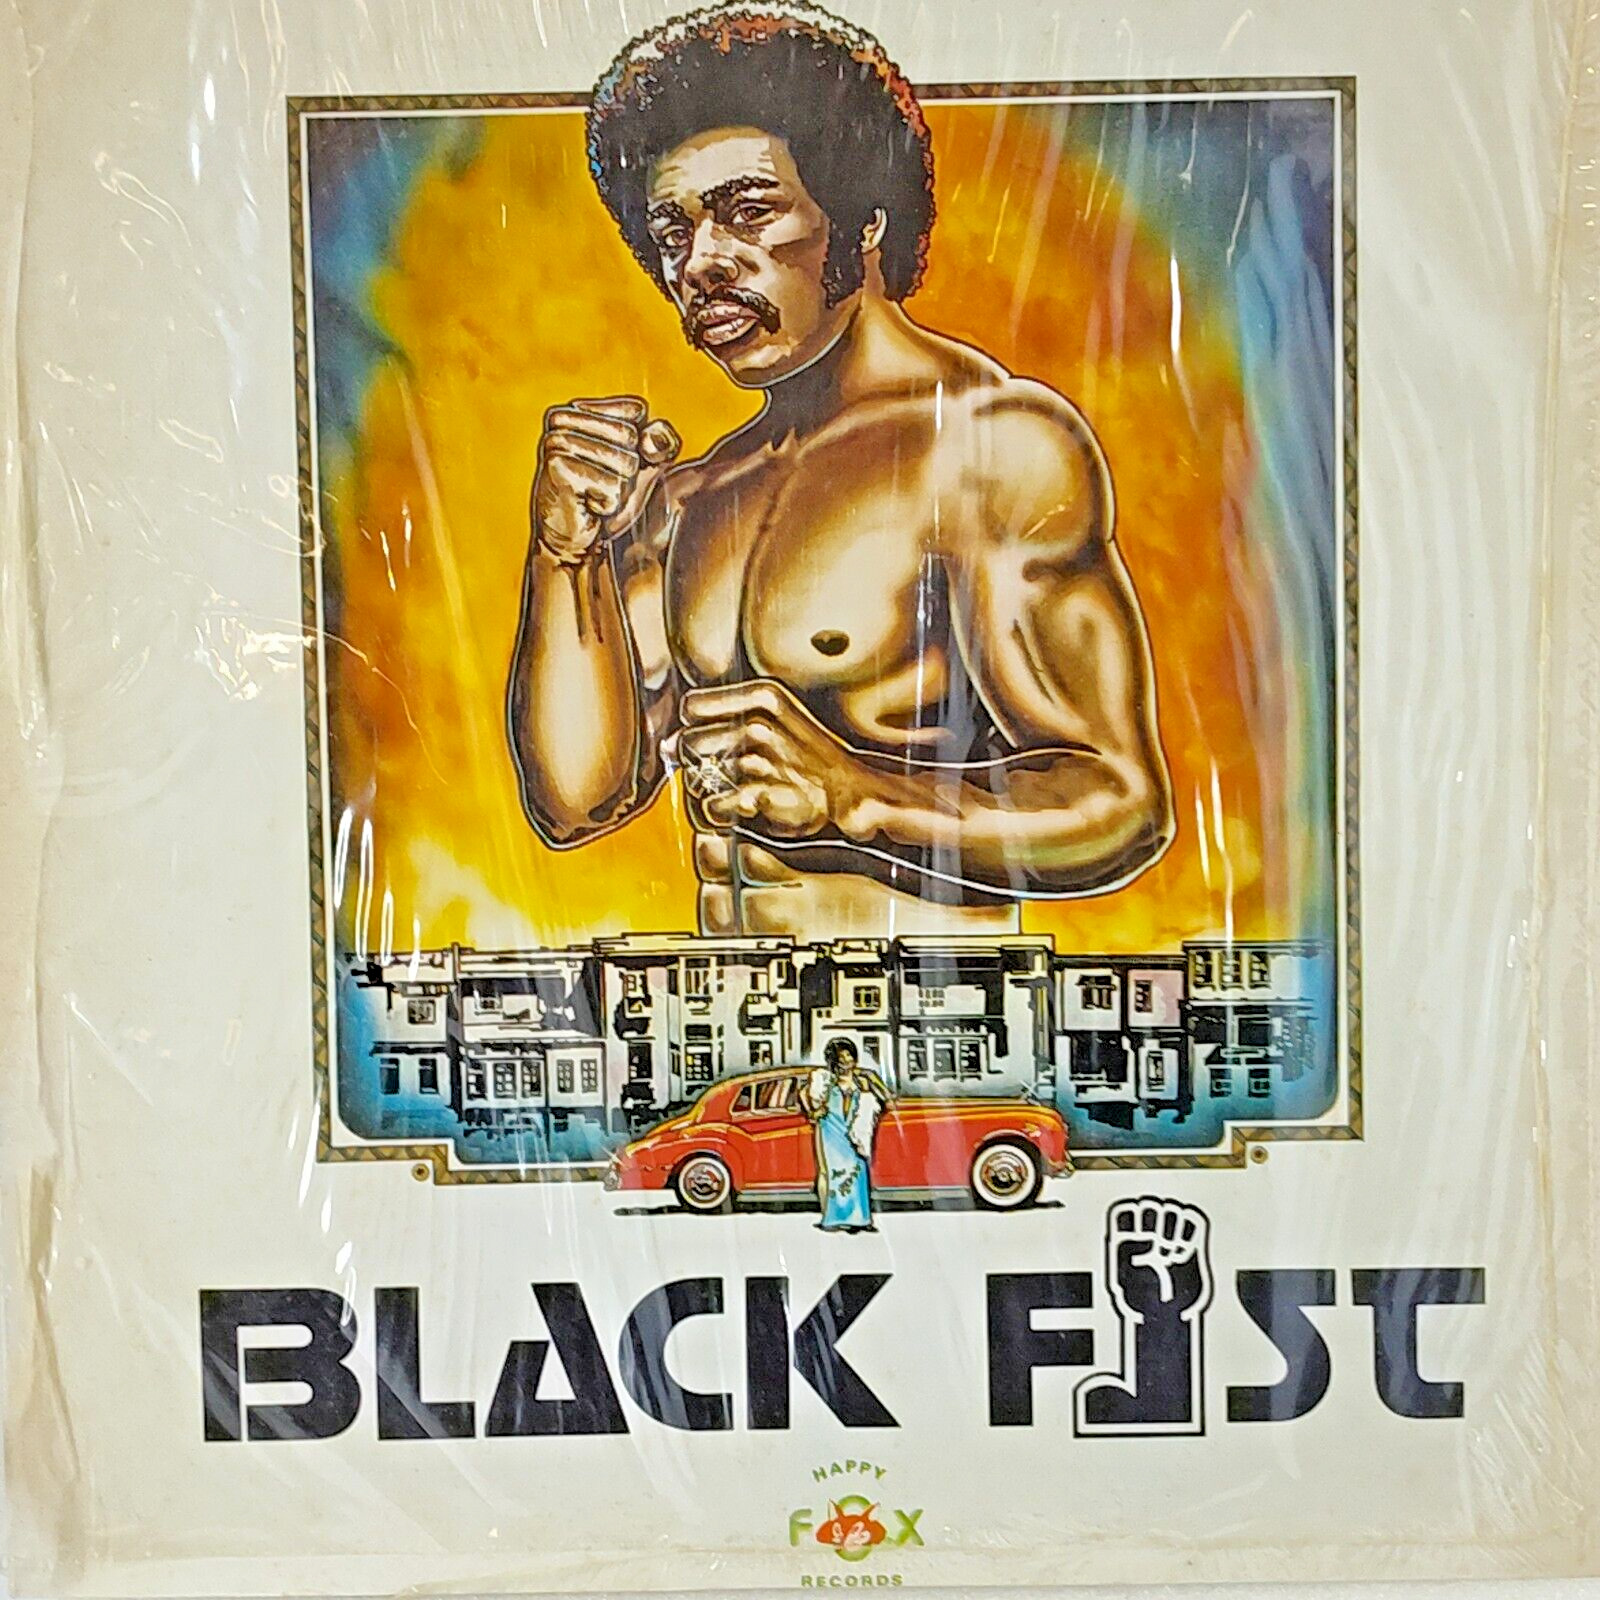 Black Fist Original Motion Picture Soundtrack 1977 Happy Fox Rec HF-1101 Vinyl